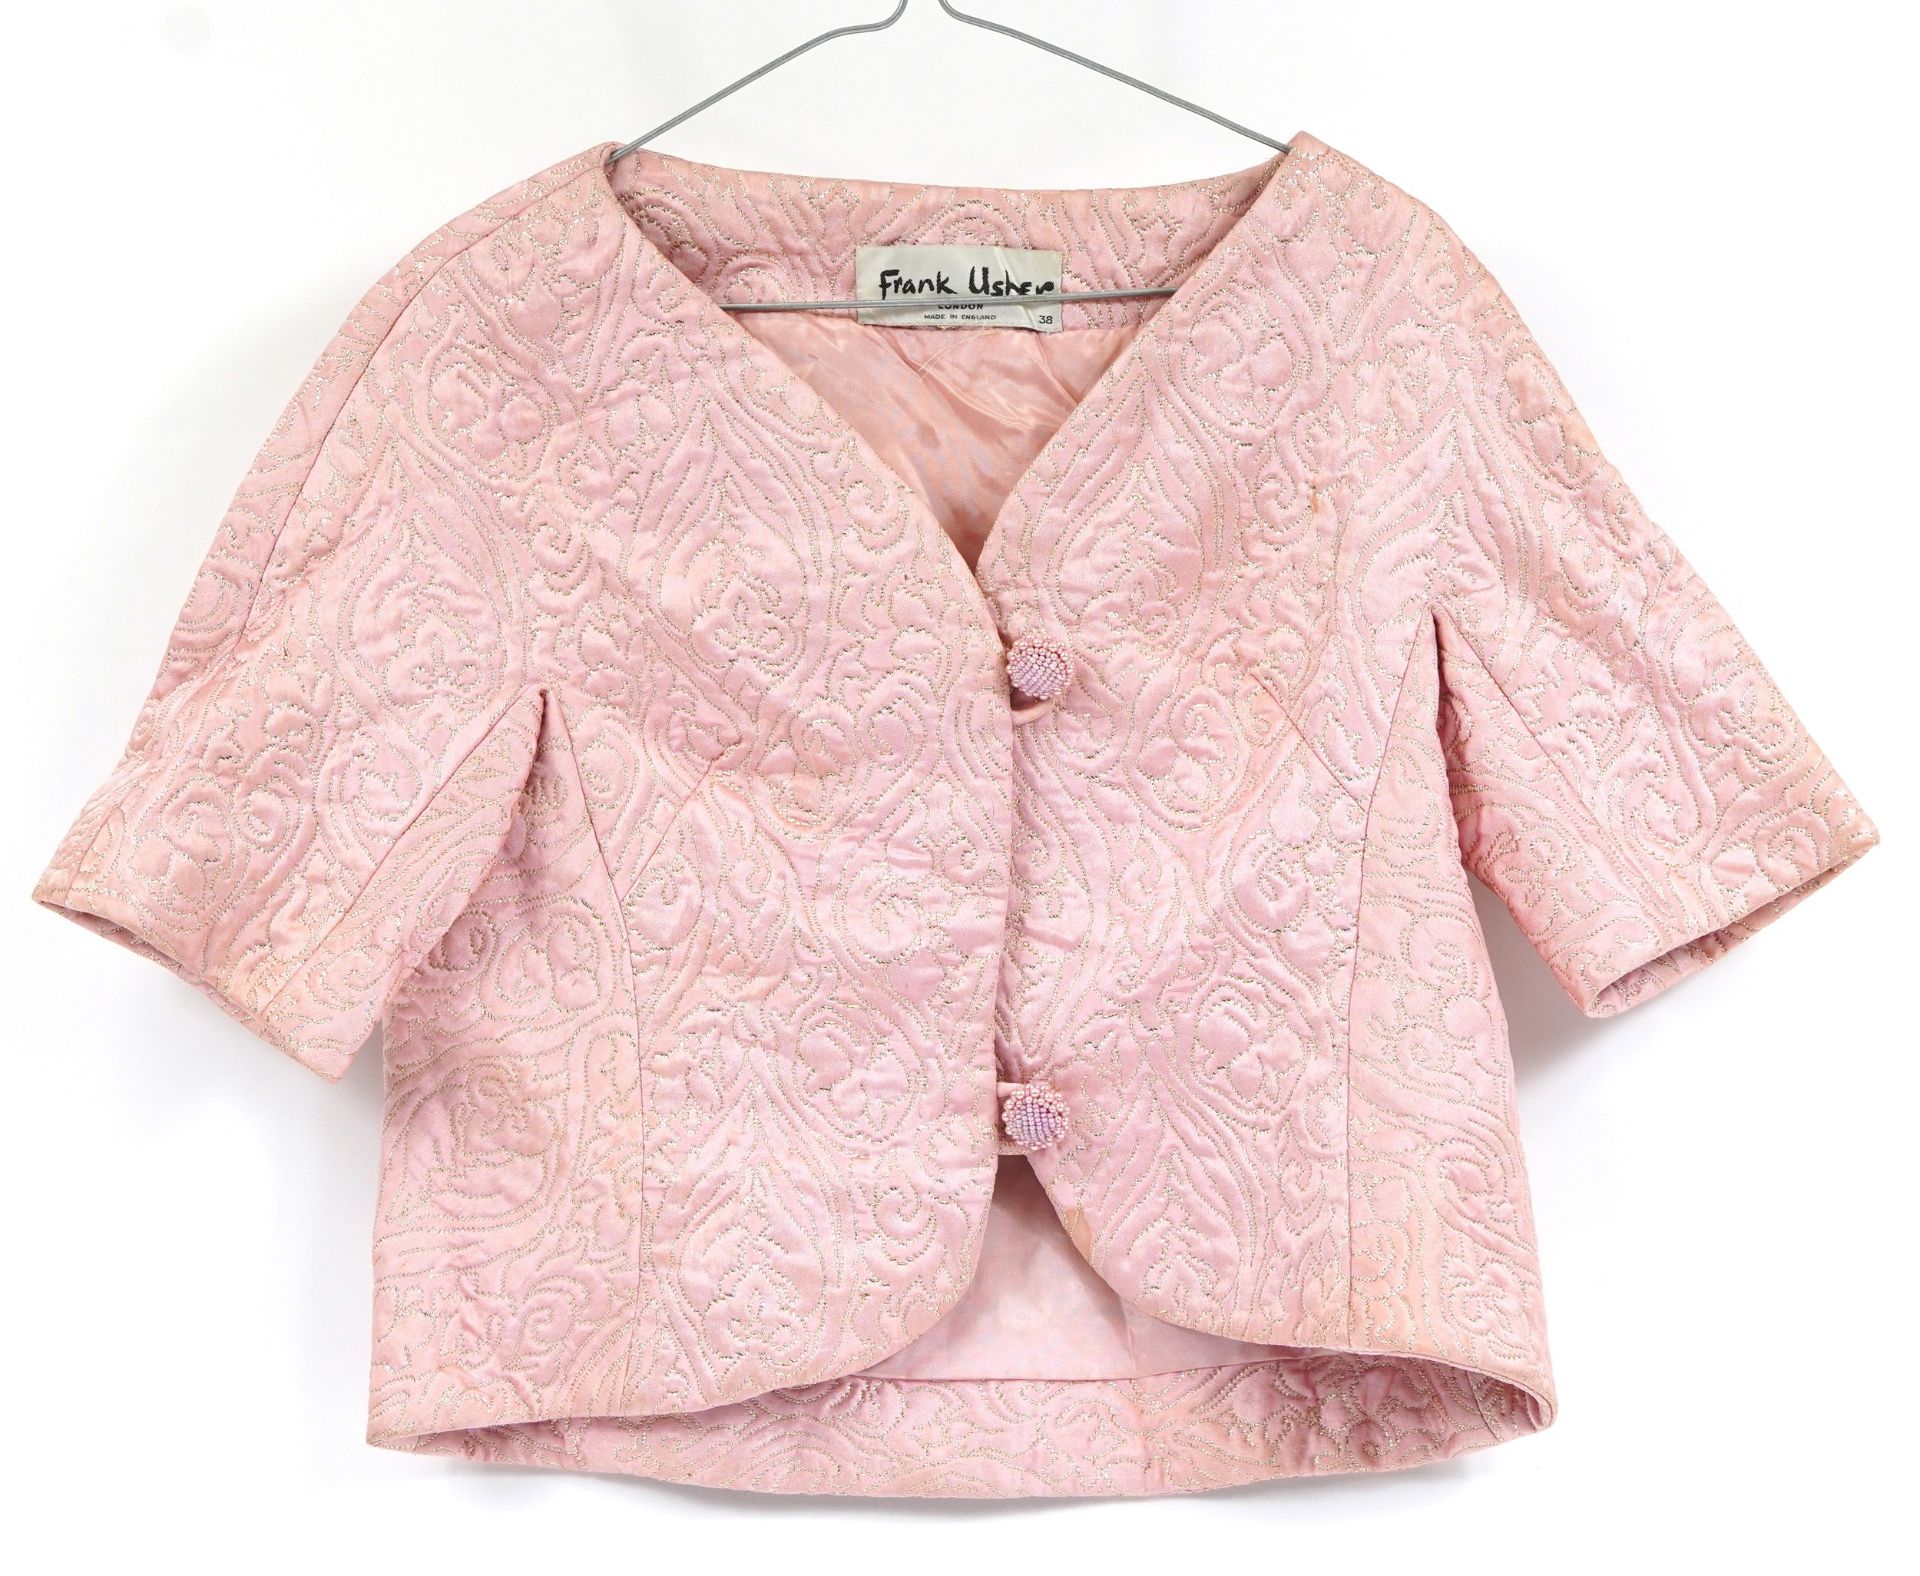 Pink silk Frank Usher ladies' short jacket with gold braiding, size 38